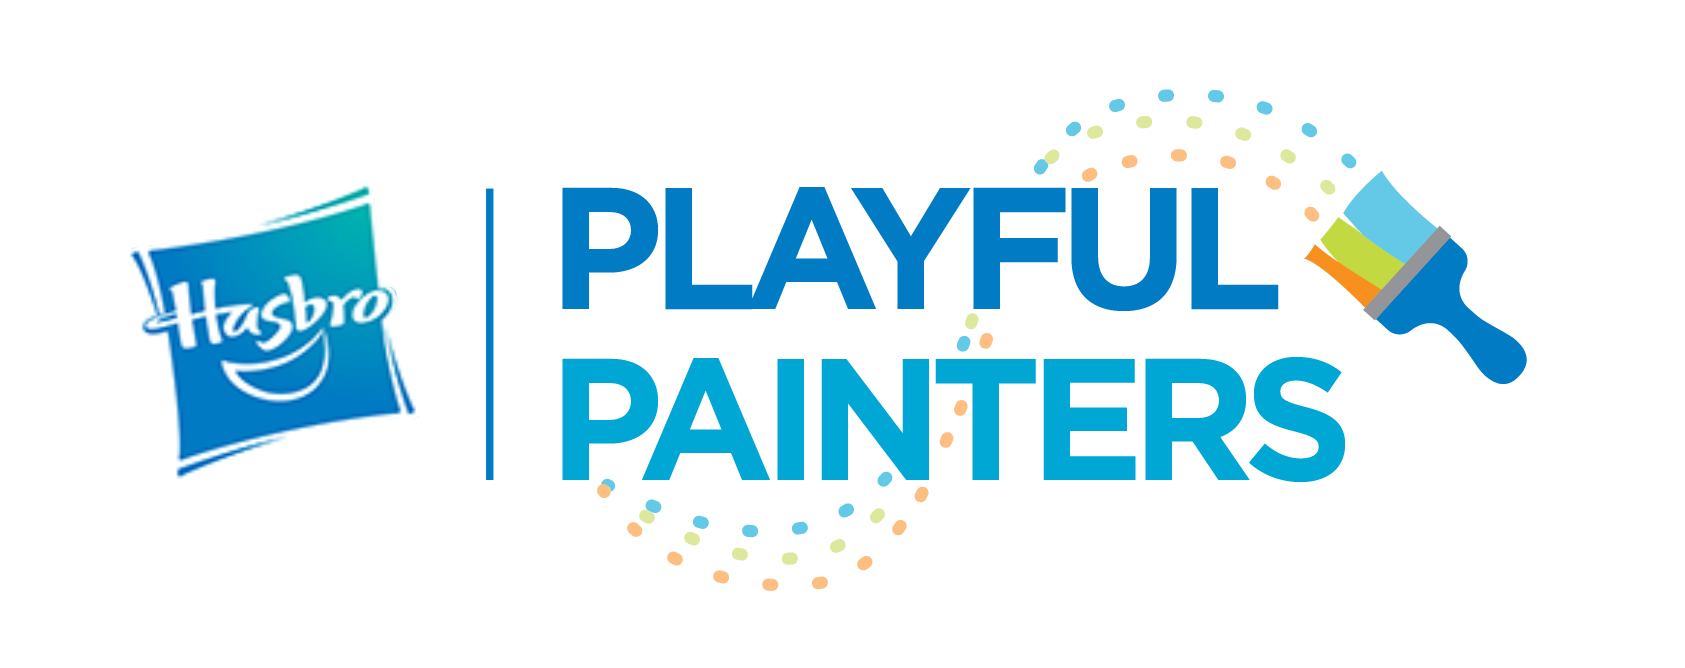 Playful Painters logo